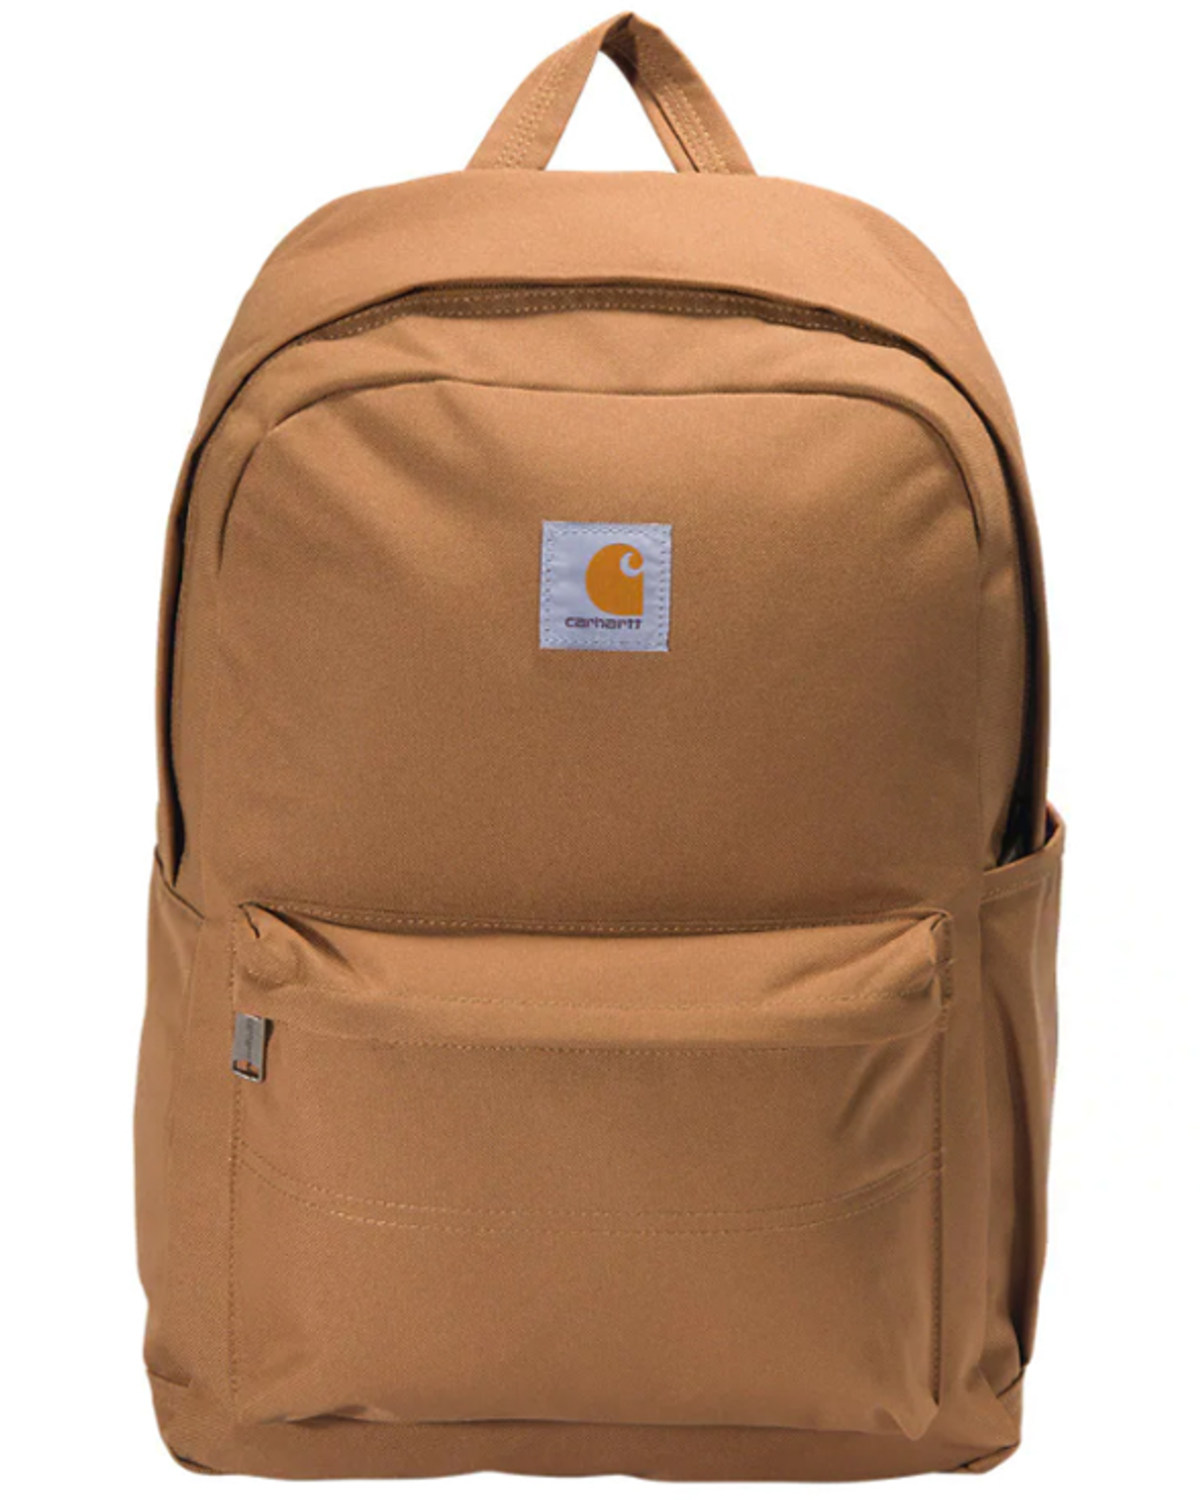 Carhartt Brown 21L Laptop Backpack